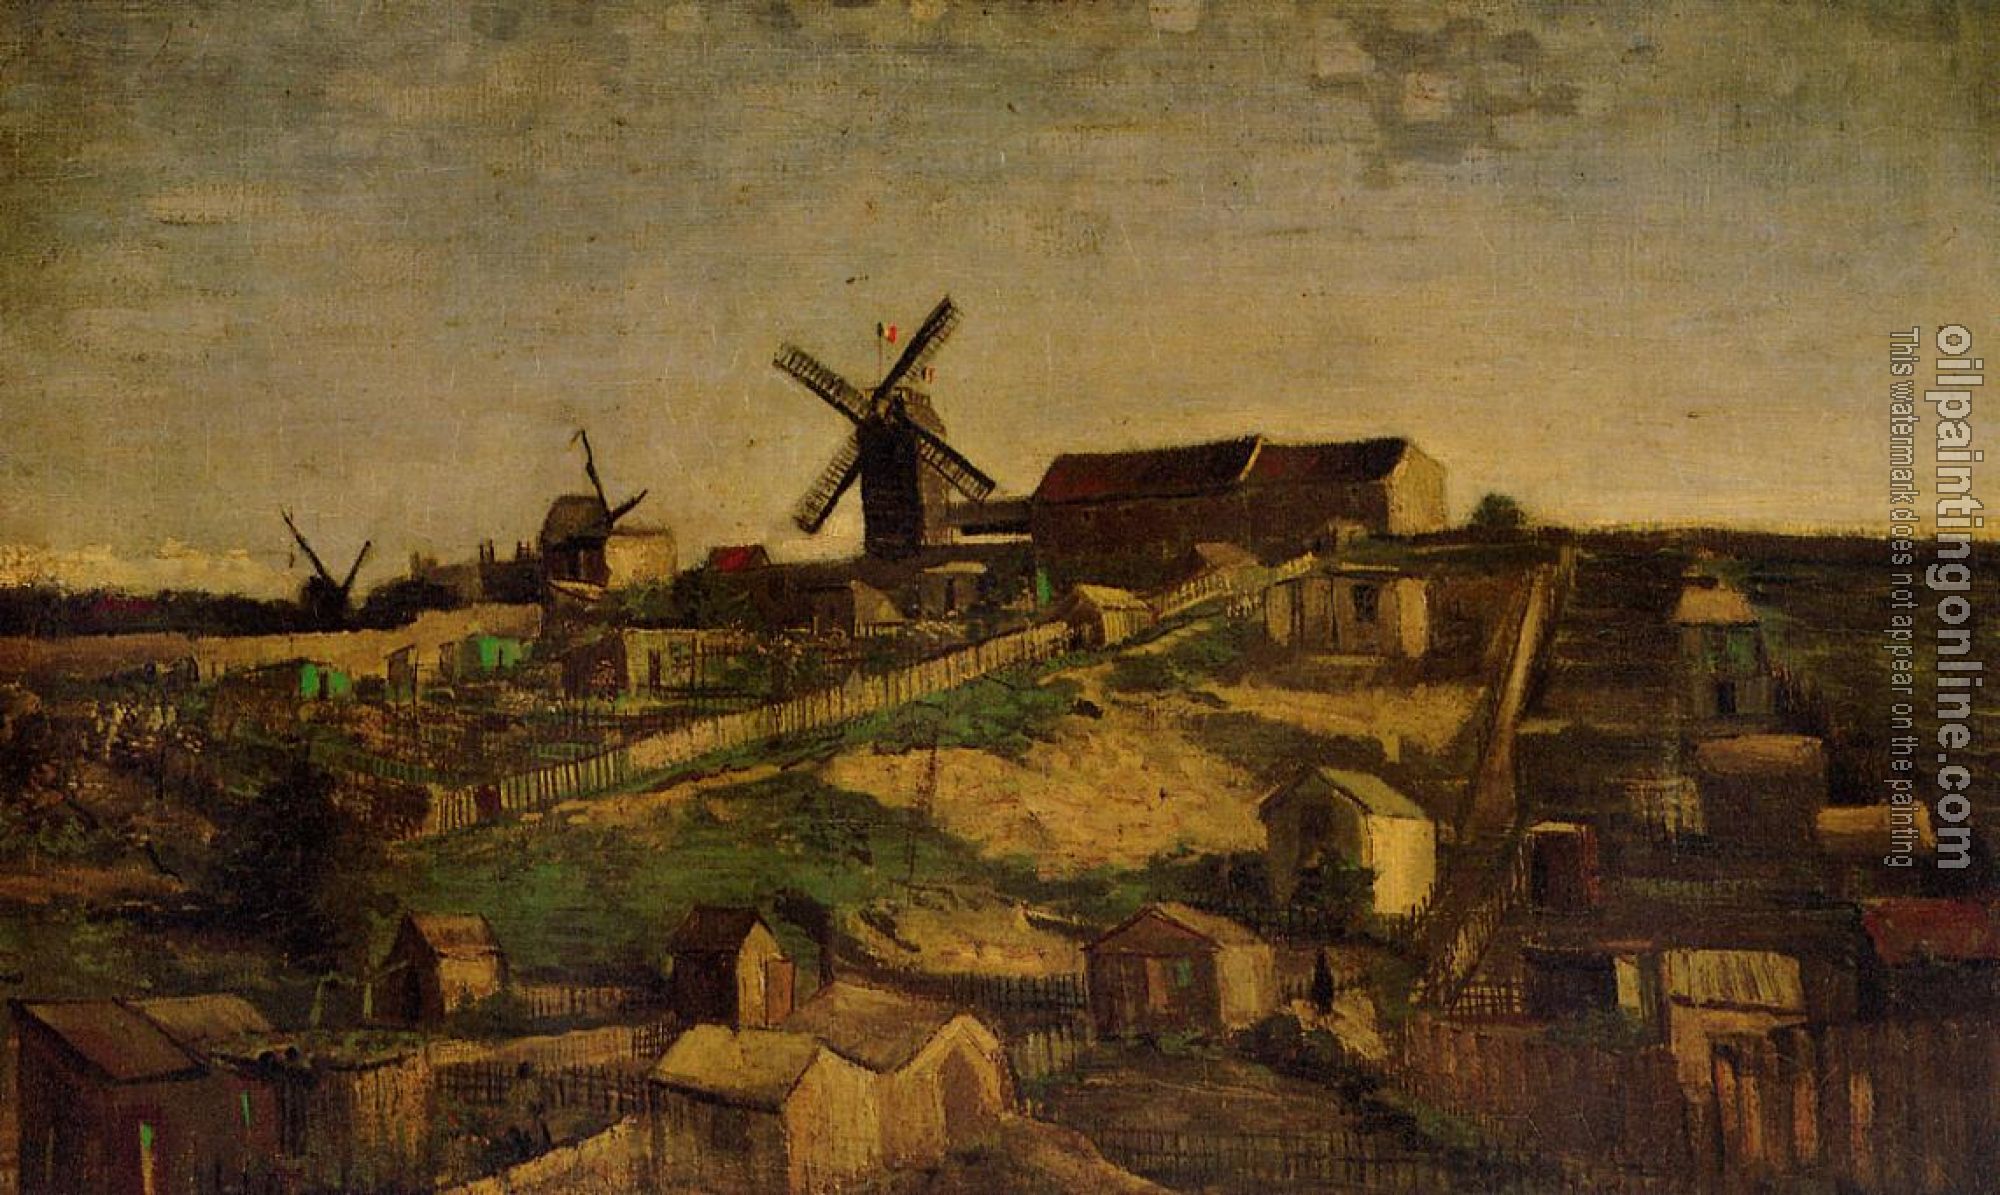 Gogh, Vincent van - View of Montmartre with Windmills